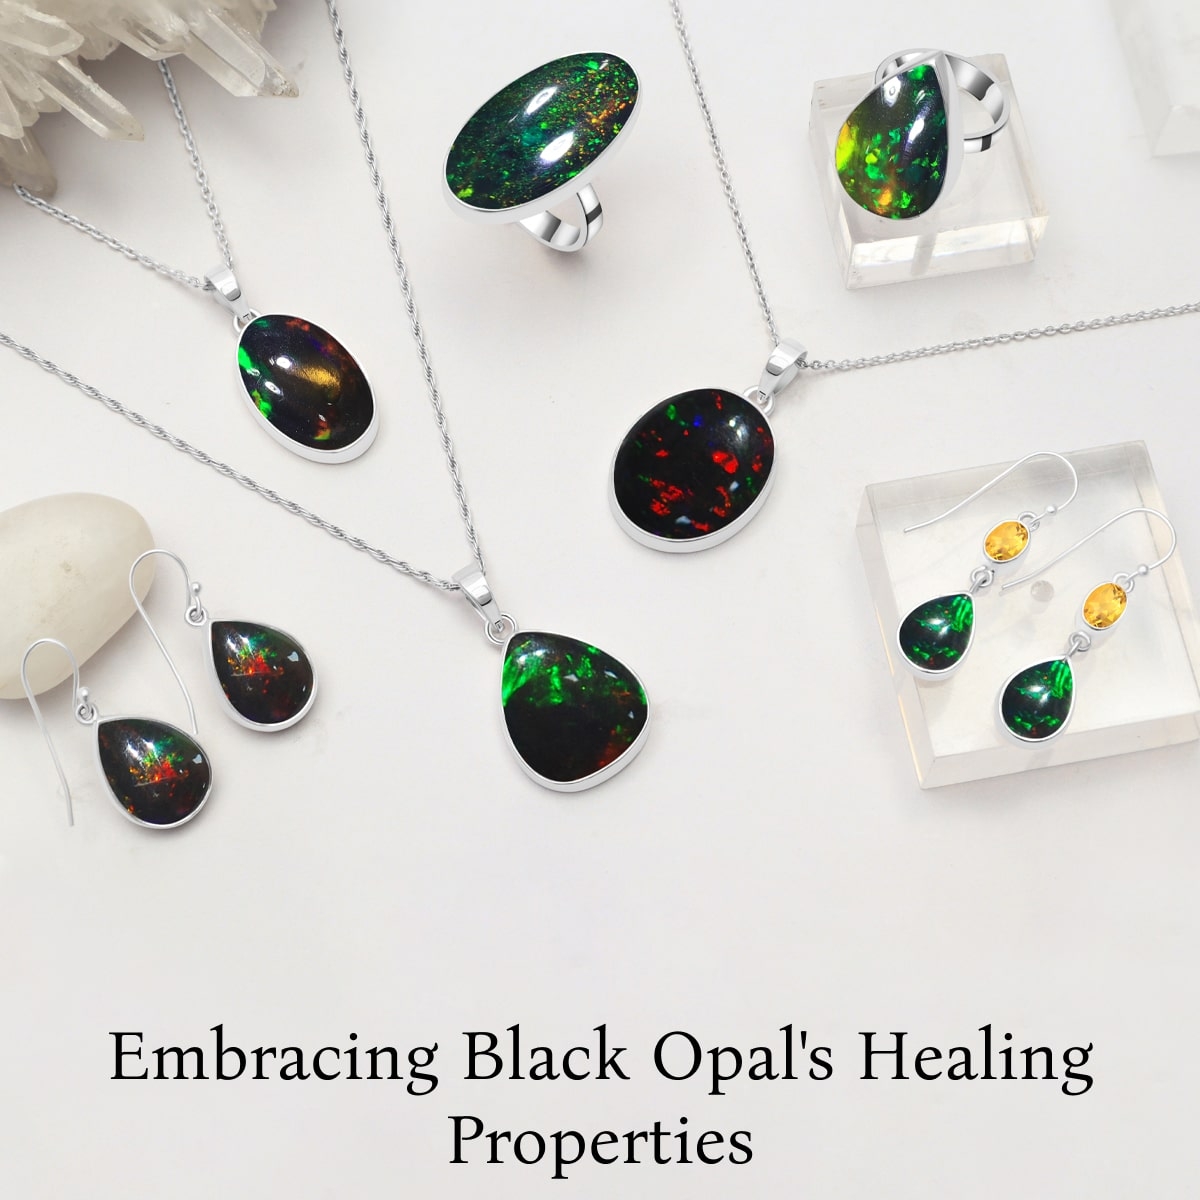 Black Opal Metaphysical Properties & Benefits